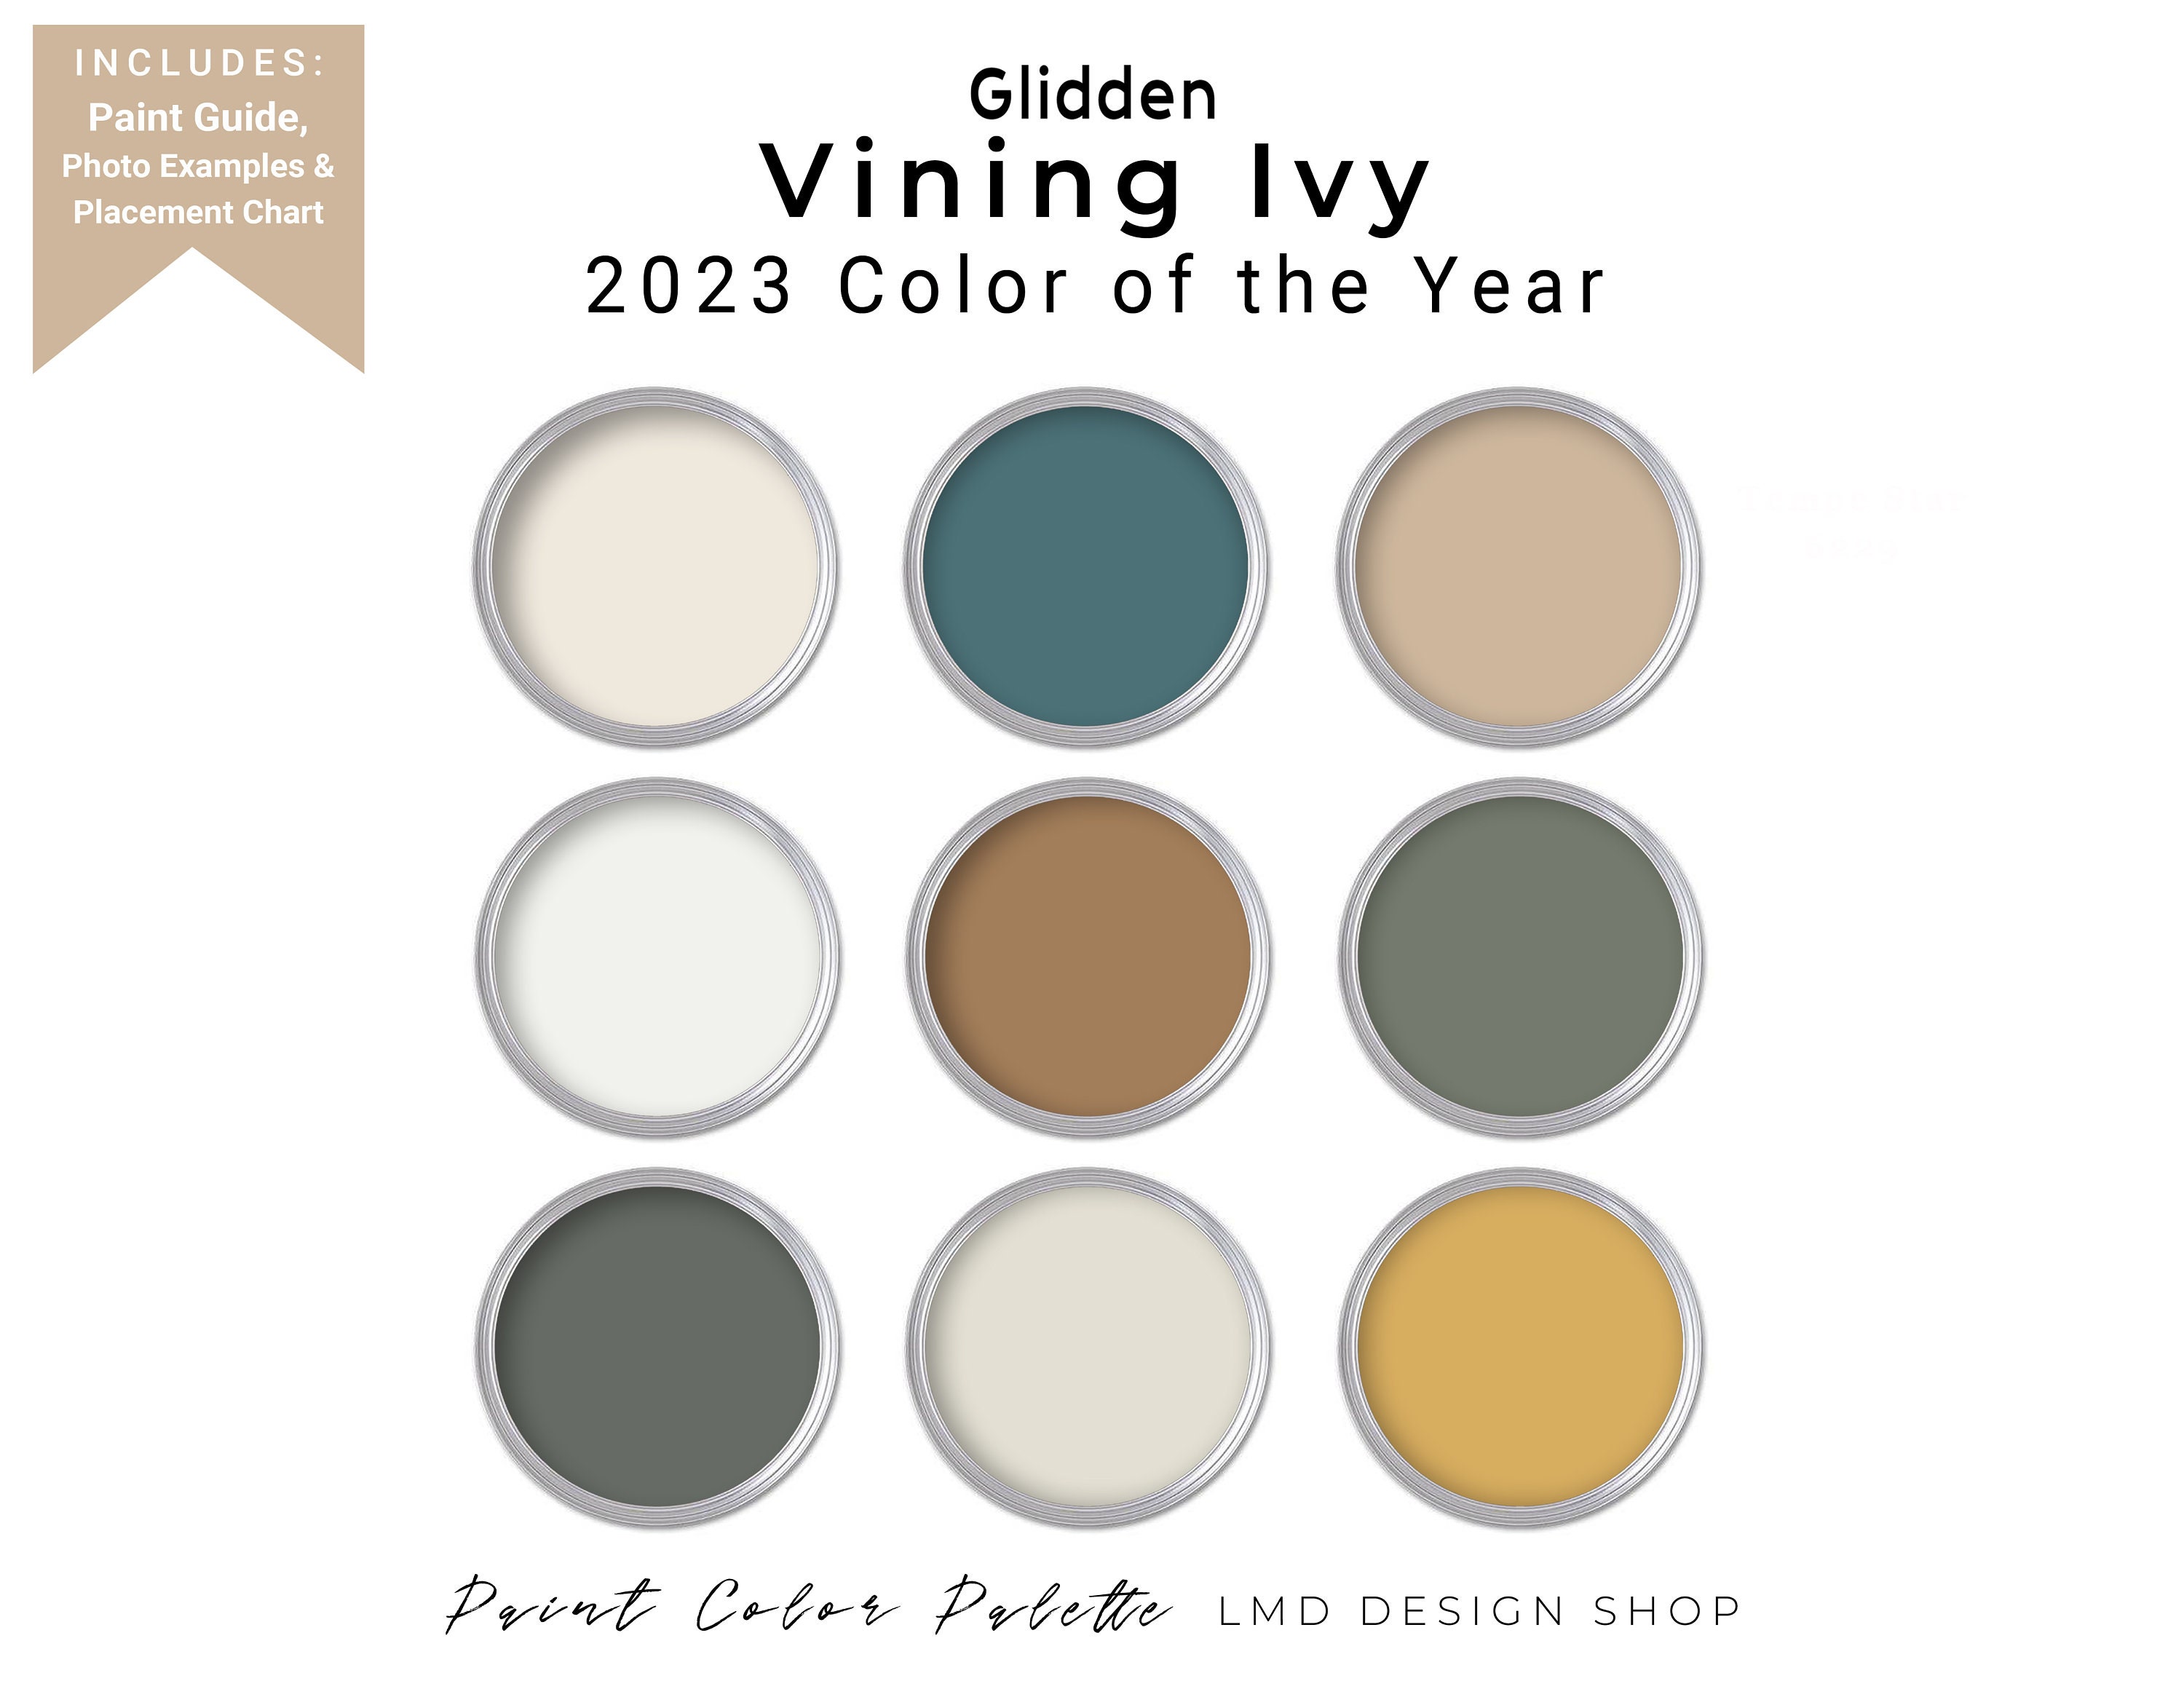 glidden-vining-ivy-paint-color-palette-2023-whole-house-etsy